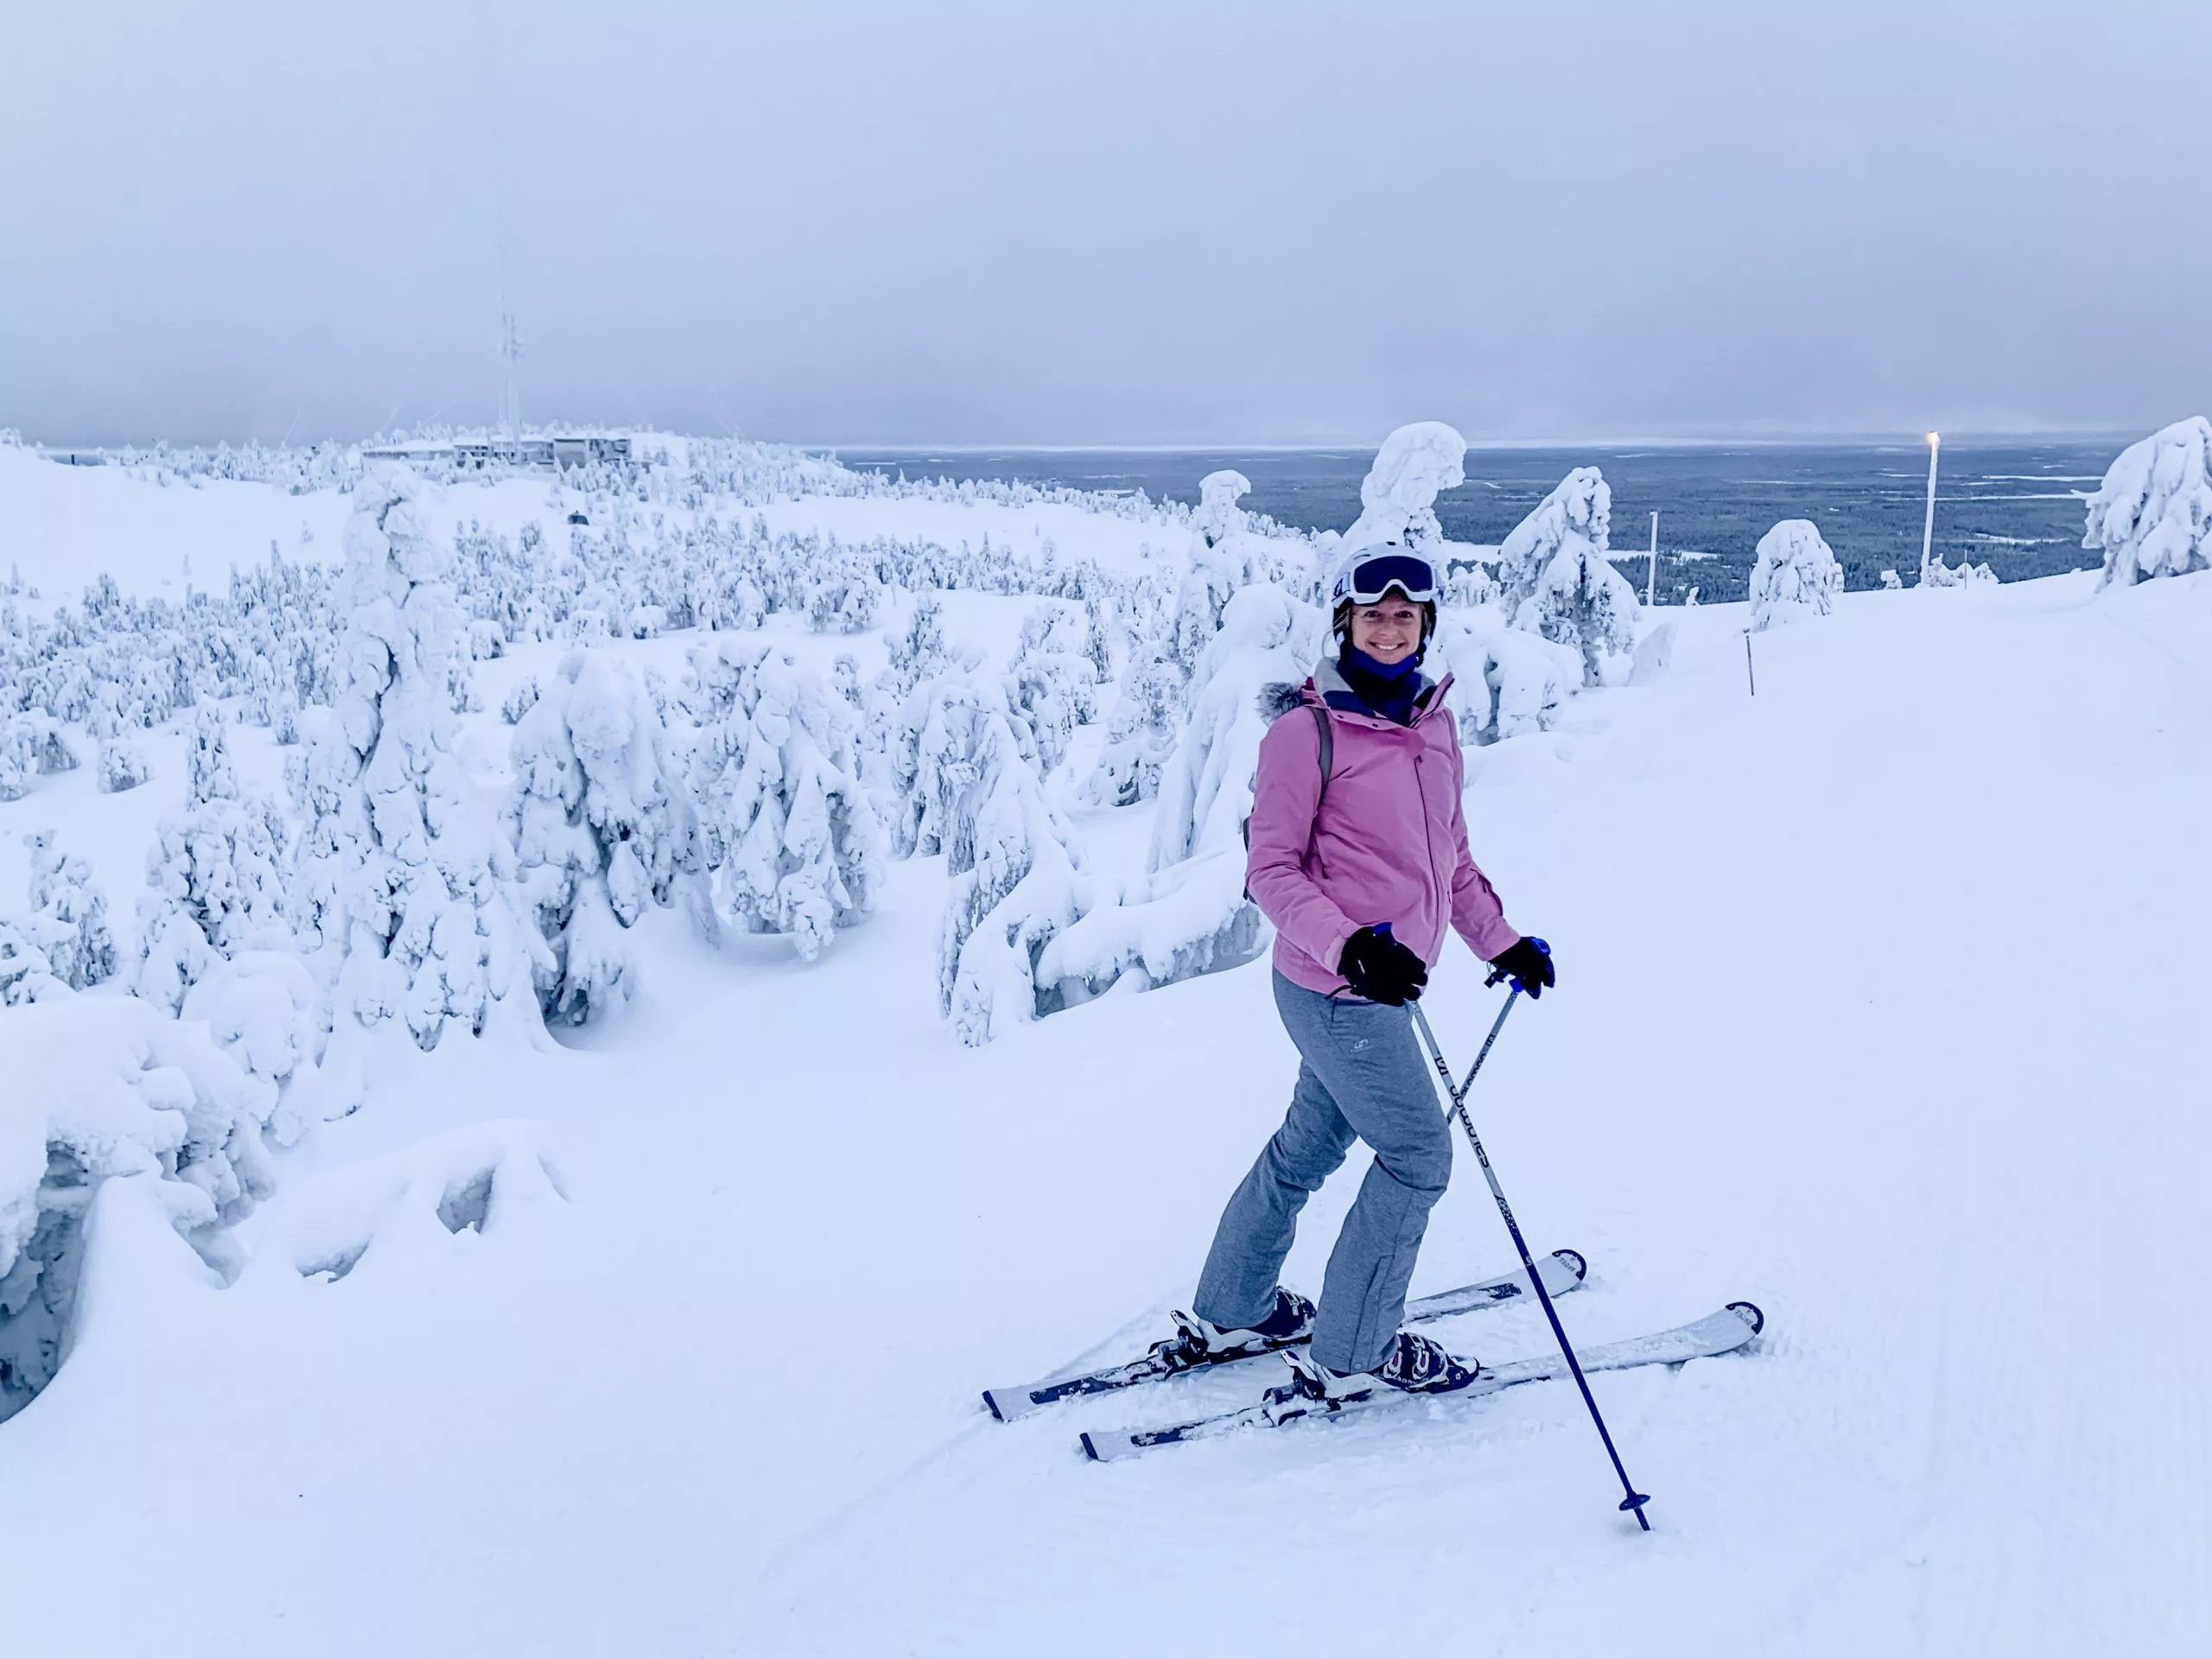 Ski School Ruka in Finland, Europe | Snowboarding,Skiing - Rated 0.8